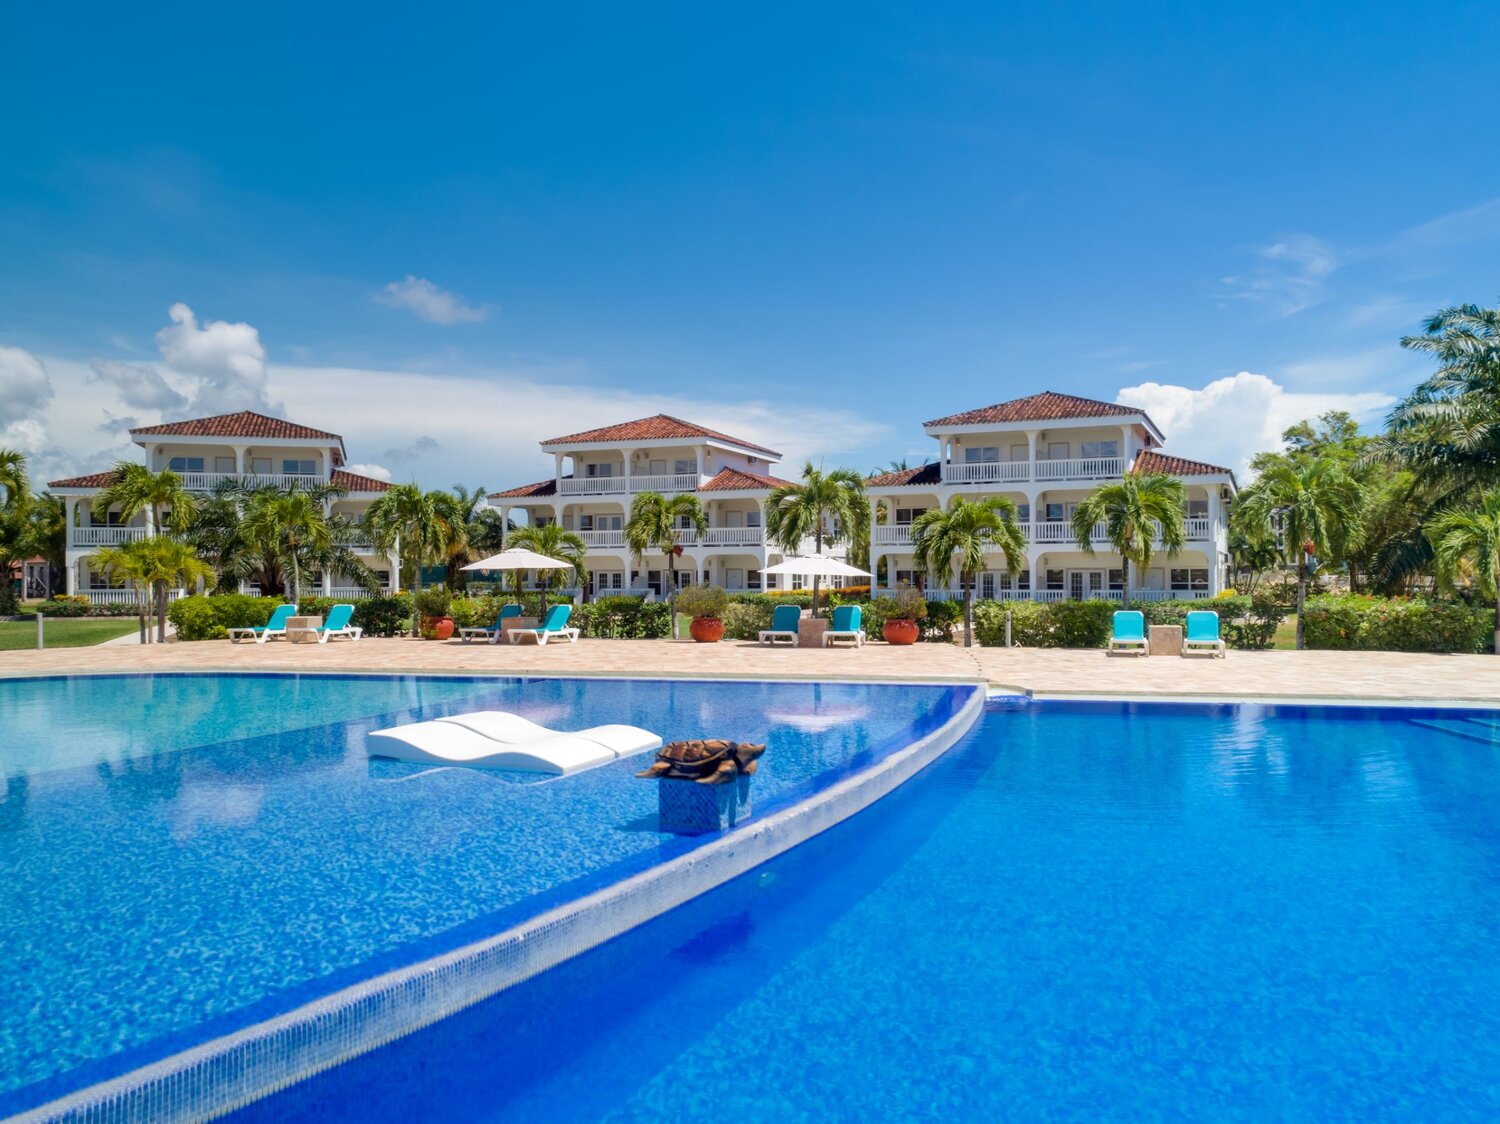 Hyatt Announces First Branded Hotel in Belize: The Placienda Resort